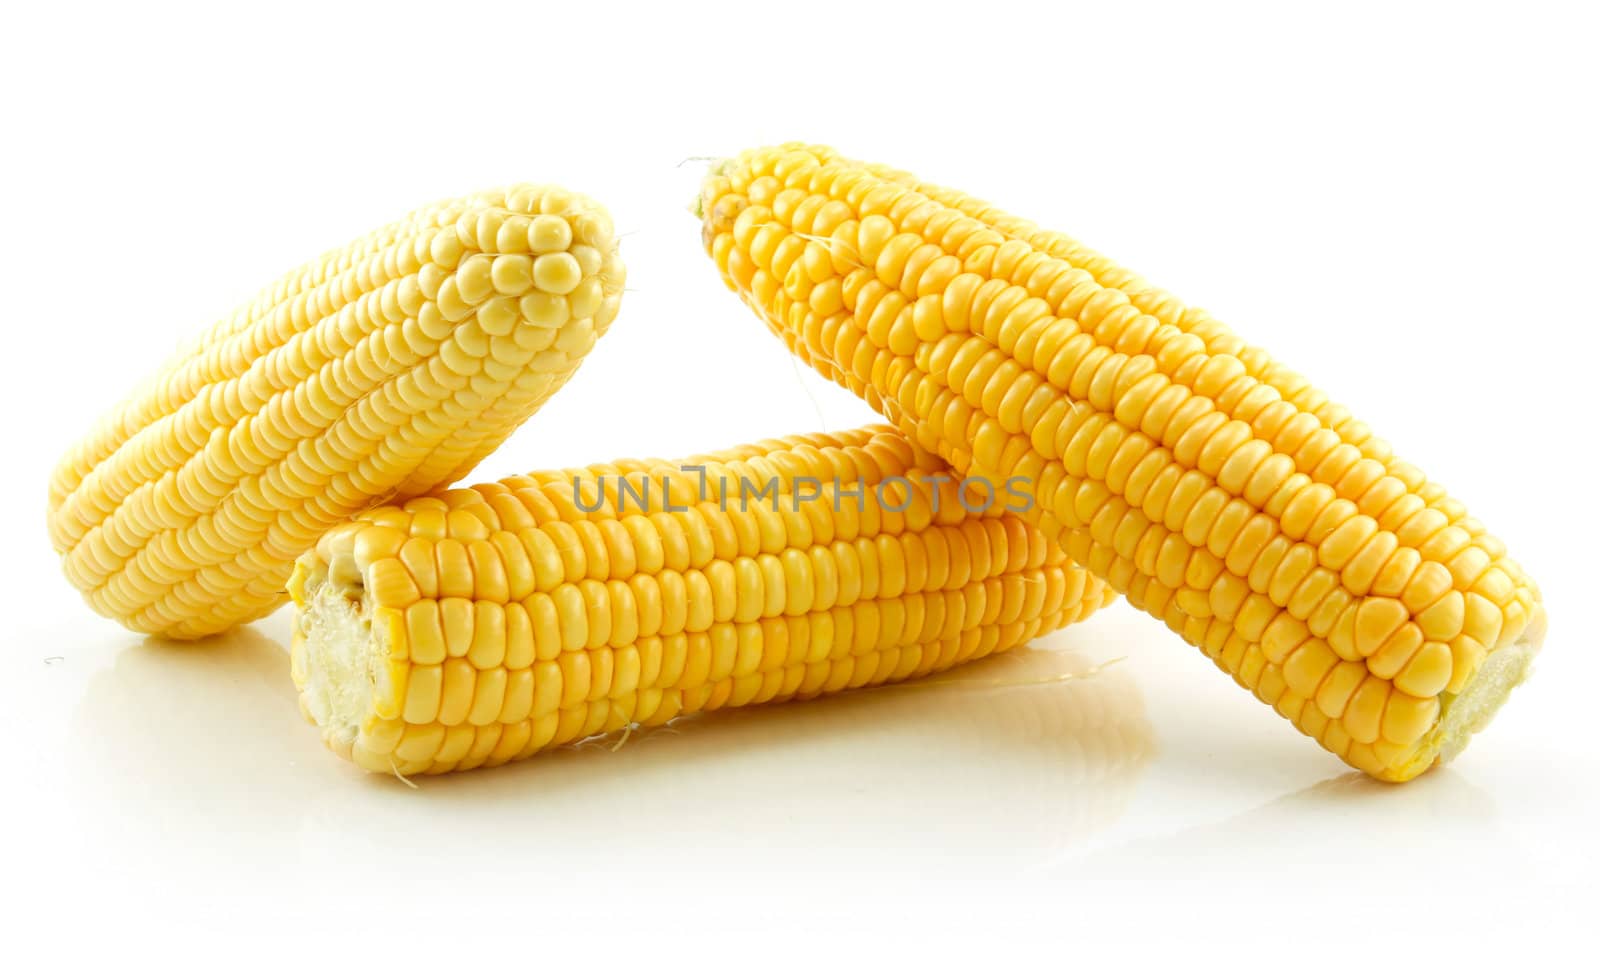 Ripe Yellow Corn Isolated on White Background